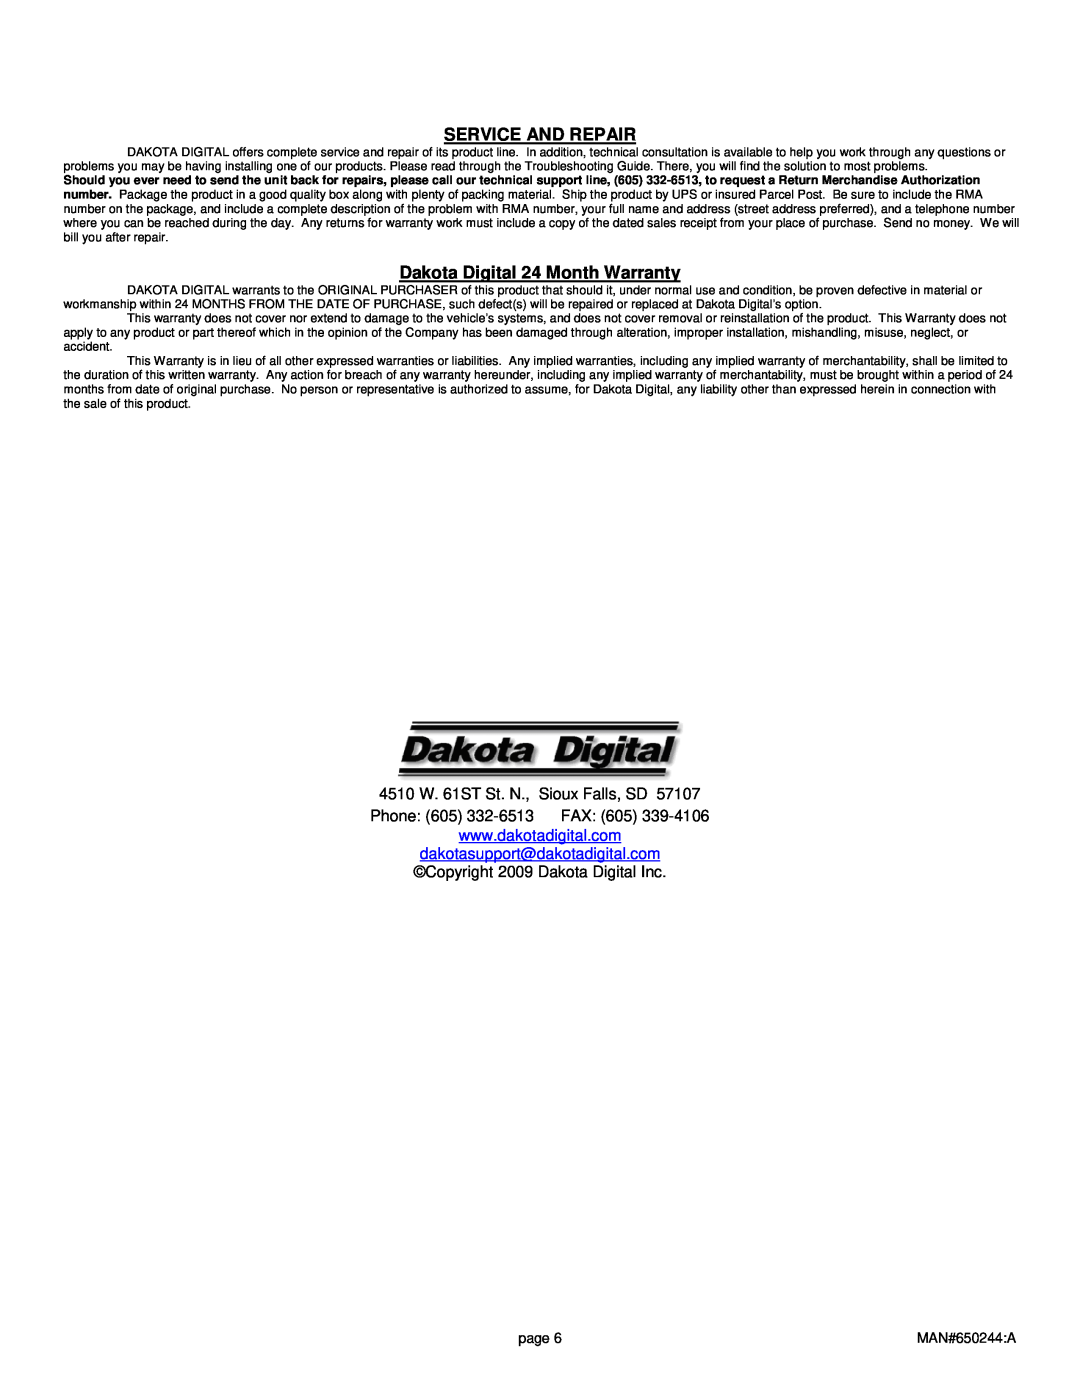 Dakota Digital UTV-1200 manual 4510 W. 61ST St. N., Sioux Falls, SD Phone 605 332-6513 FAX 605, Service And Repair, page 